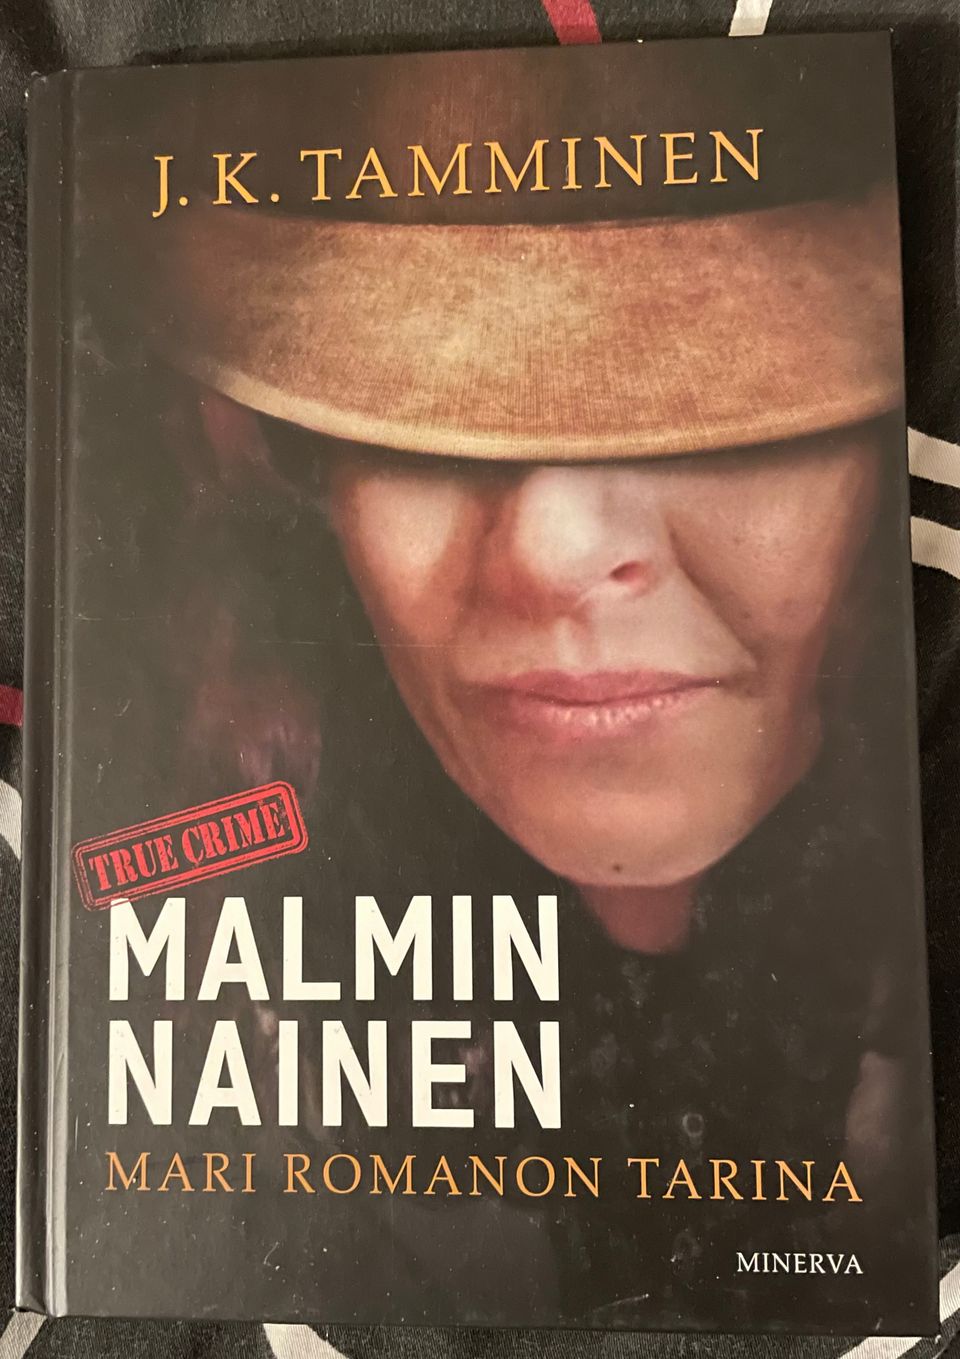 Malmin nainen - Mari Romanon tarina (True Crime)